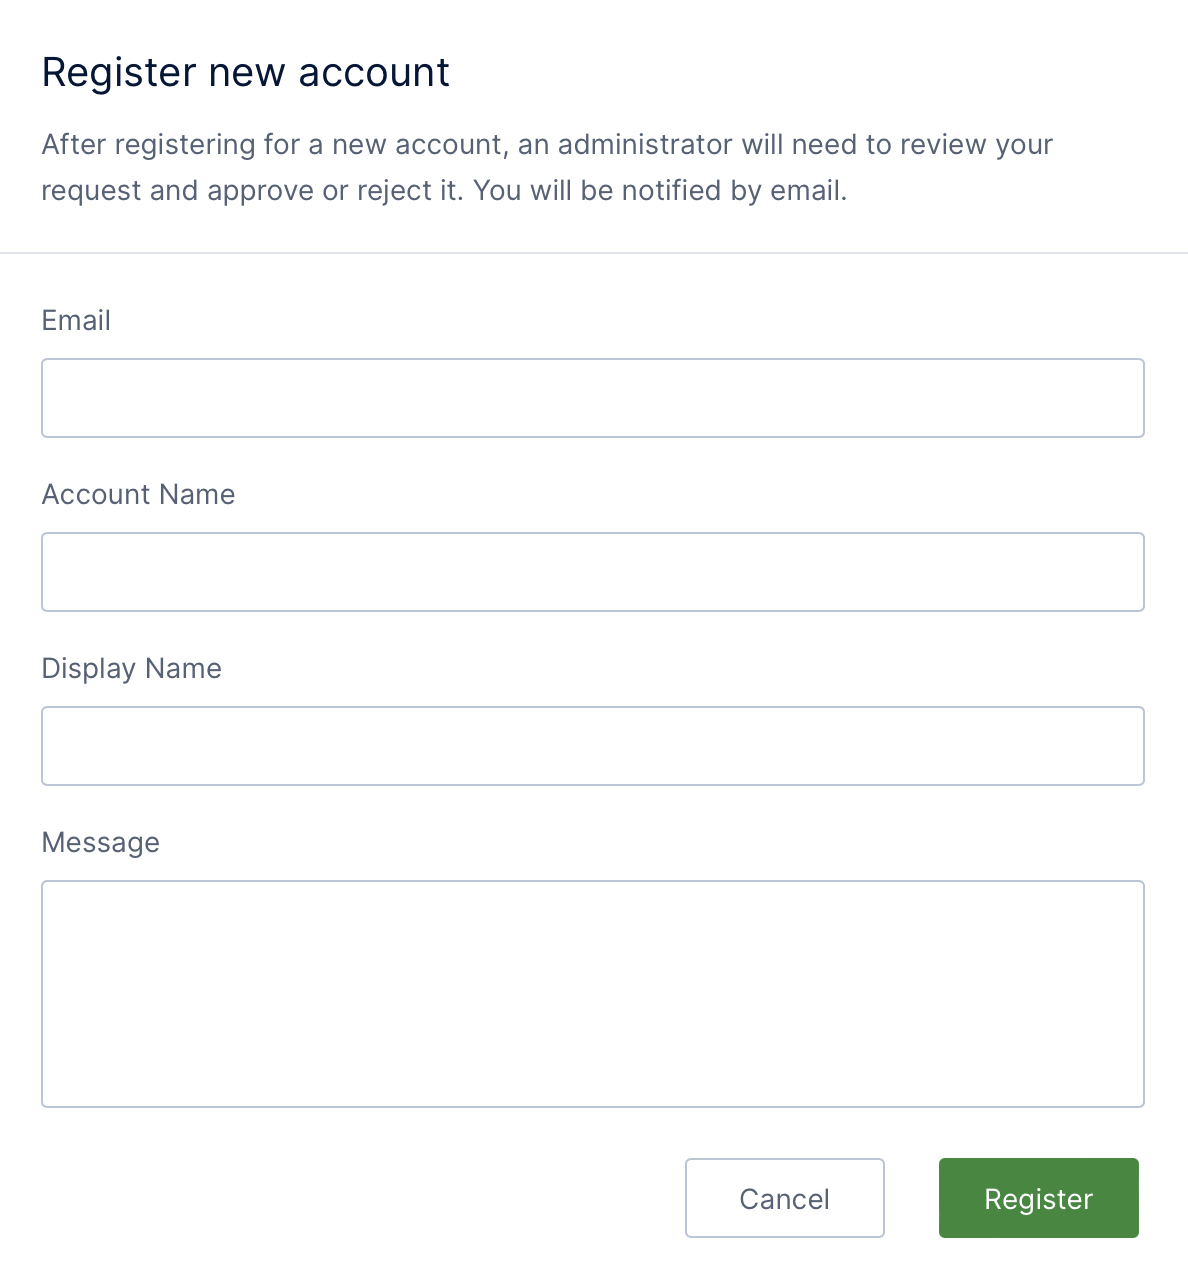 Registering a new account